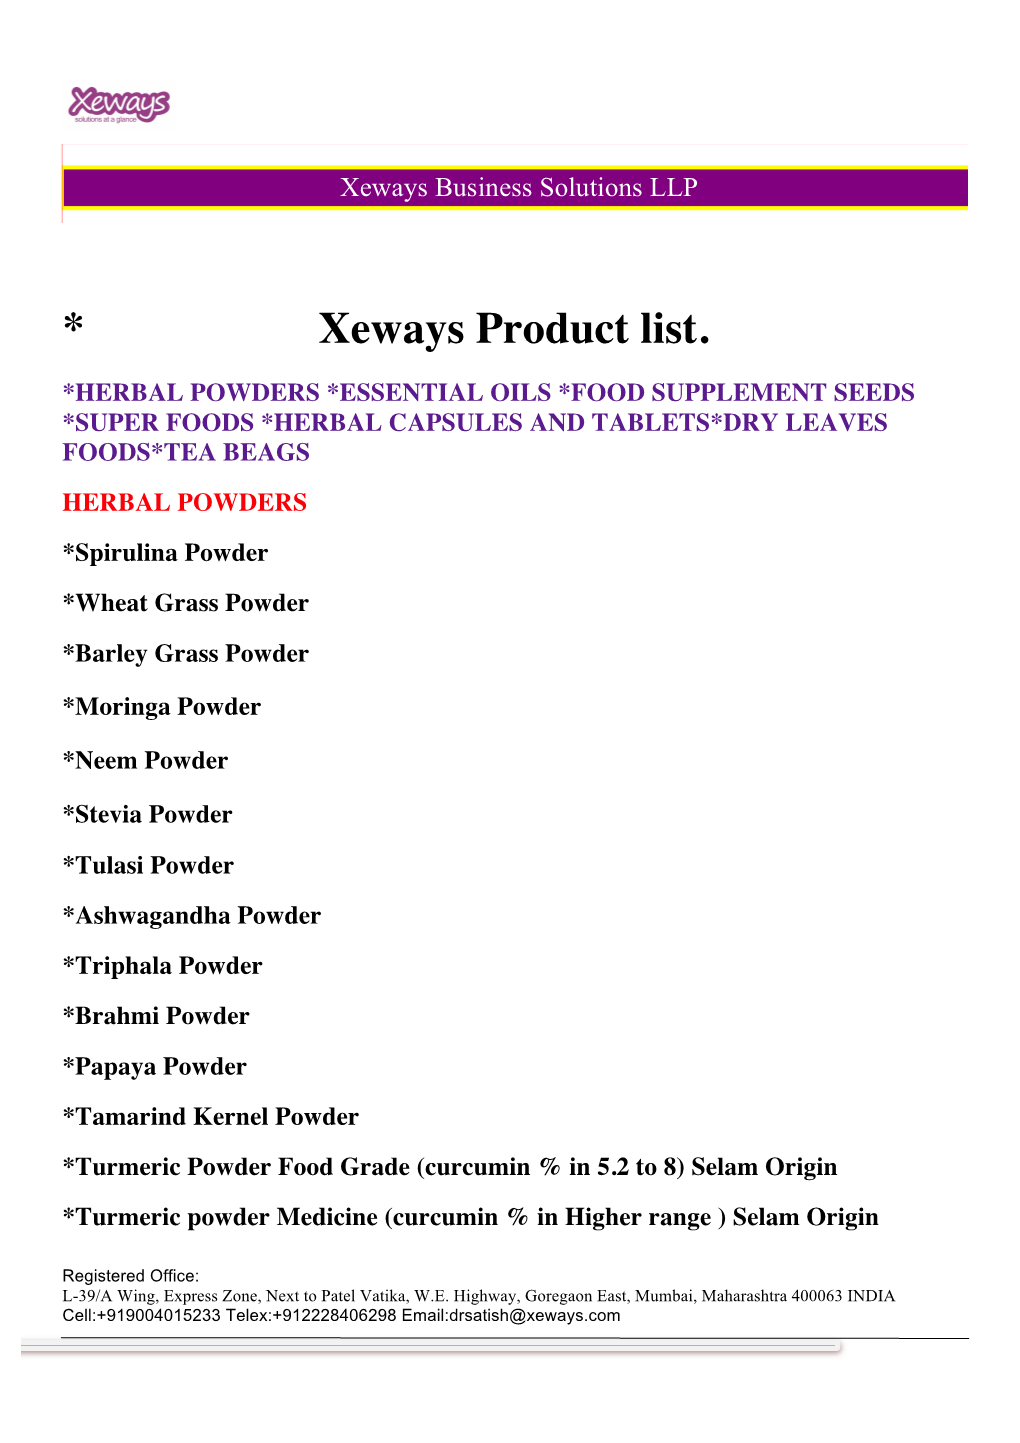 * Xeways Product List